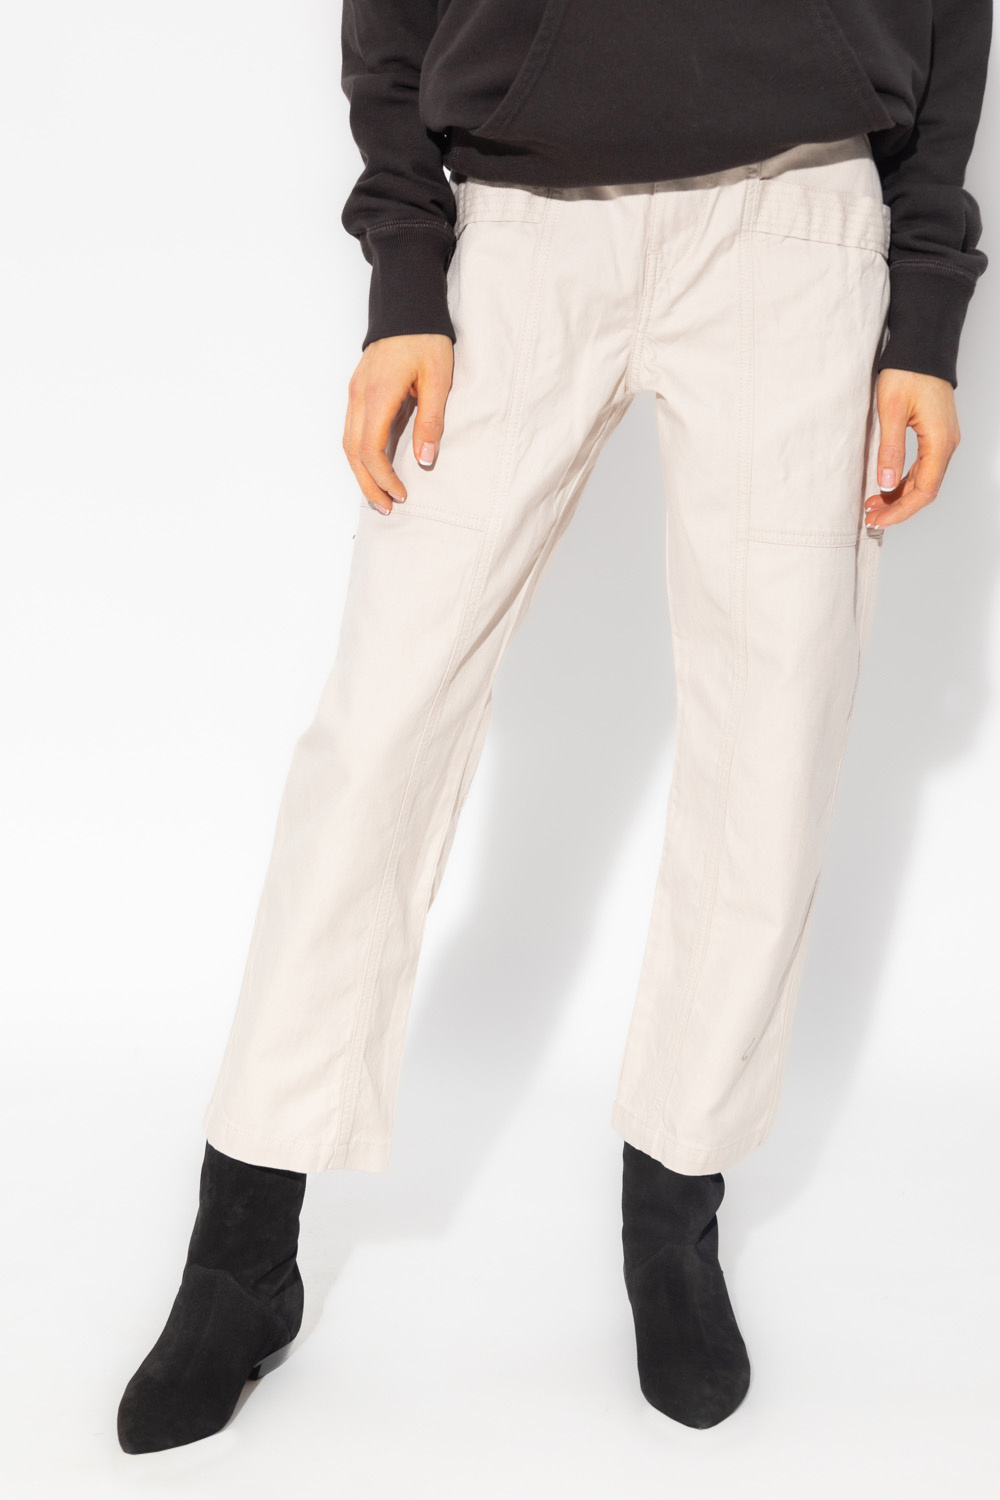 Marant Etoile ‘Pandore’ Grunge-Inspired trousers